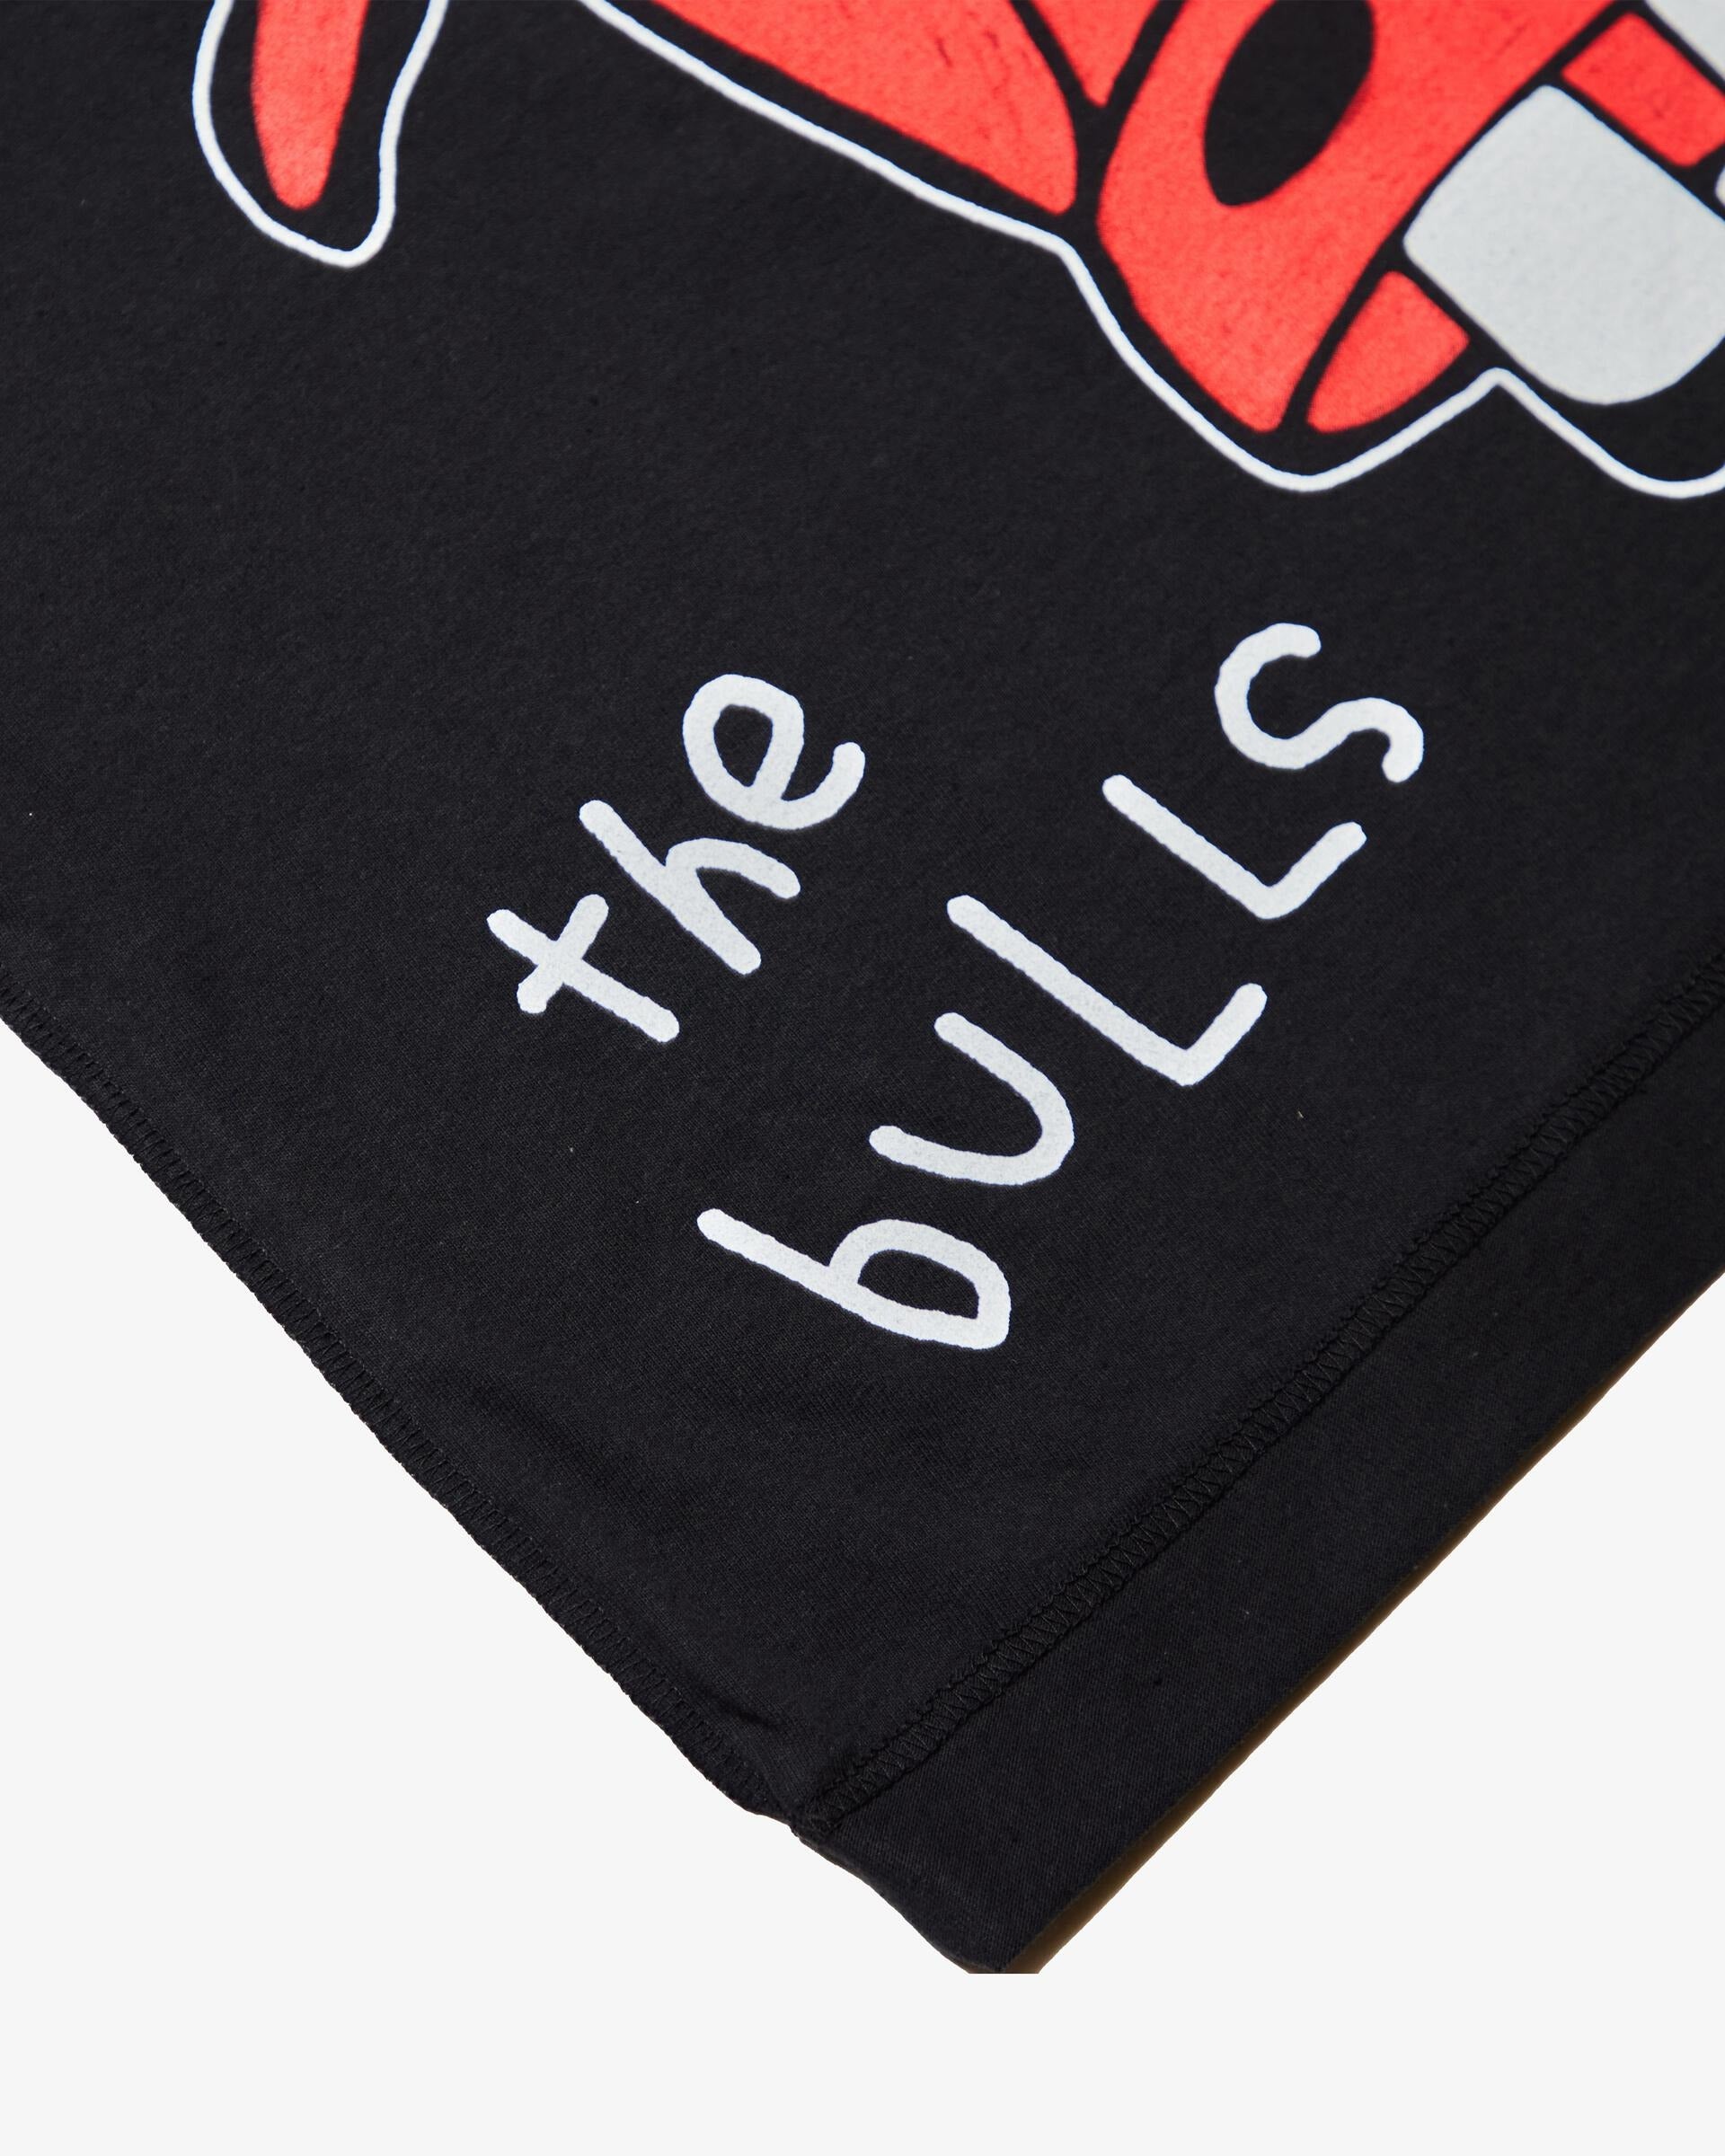 B2SS Tee Shirt - Chicago Bulls